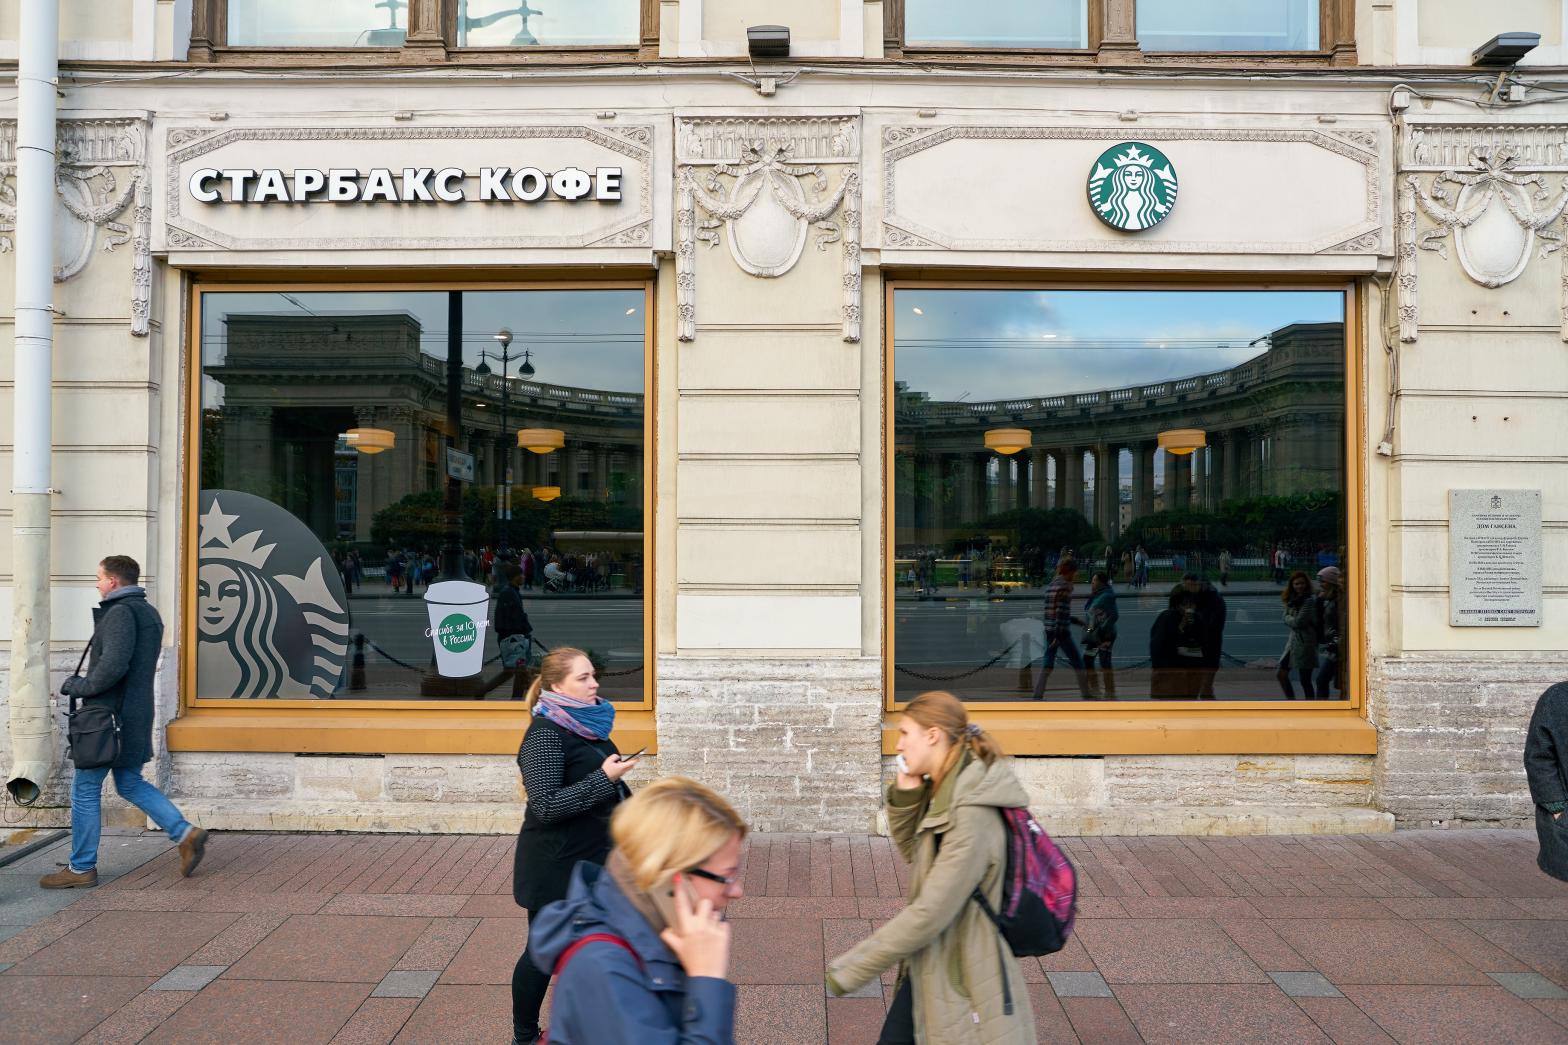 A Starbucks coffee shop in St. Petersburg, Russia (Image: Sorbis/Shutterstock.com, Shutterstock)